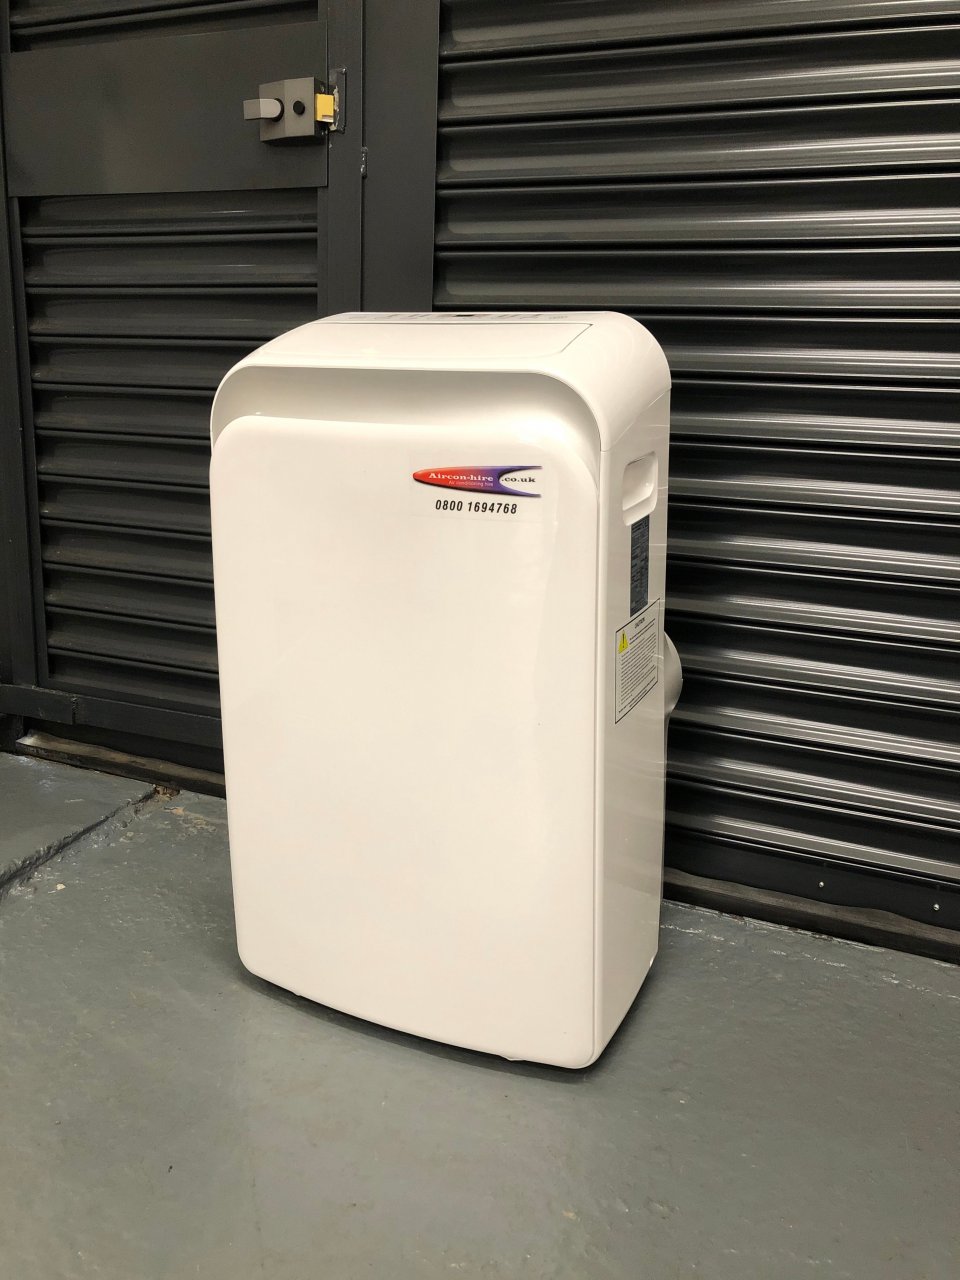 Portable Air Conditioner Hire Services